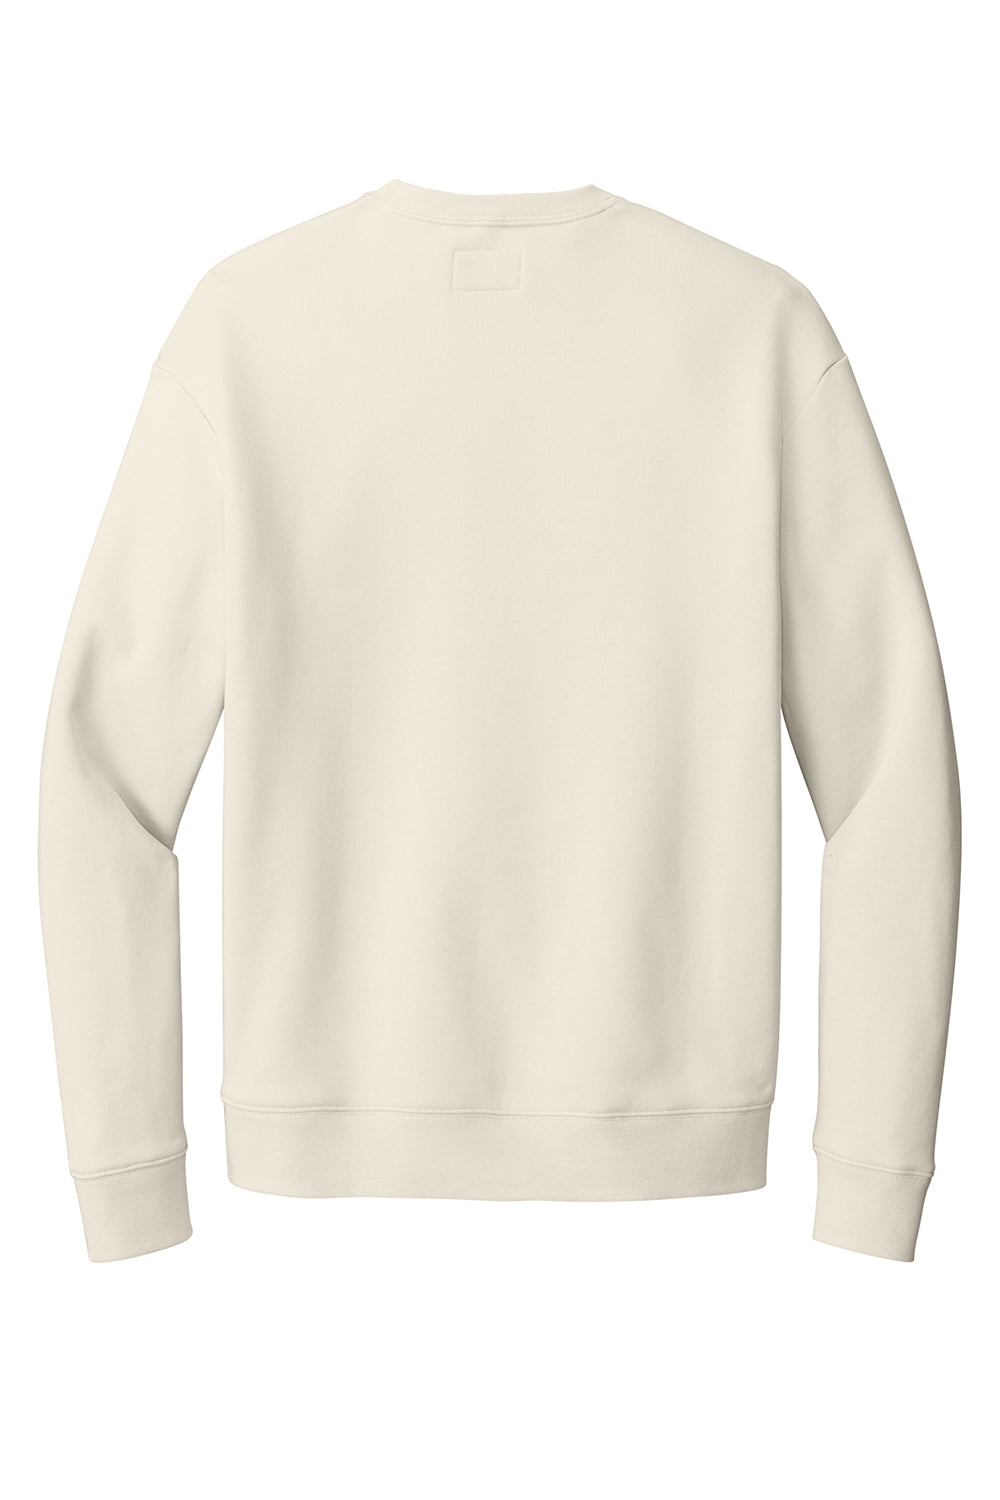 New Era NEA527 Mens Heritage Fleece Crewneck Sweatshirt w/ Pocket Soft Beige Flat Back